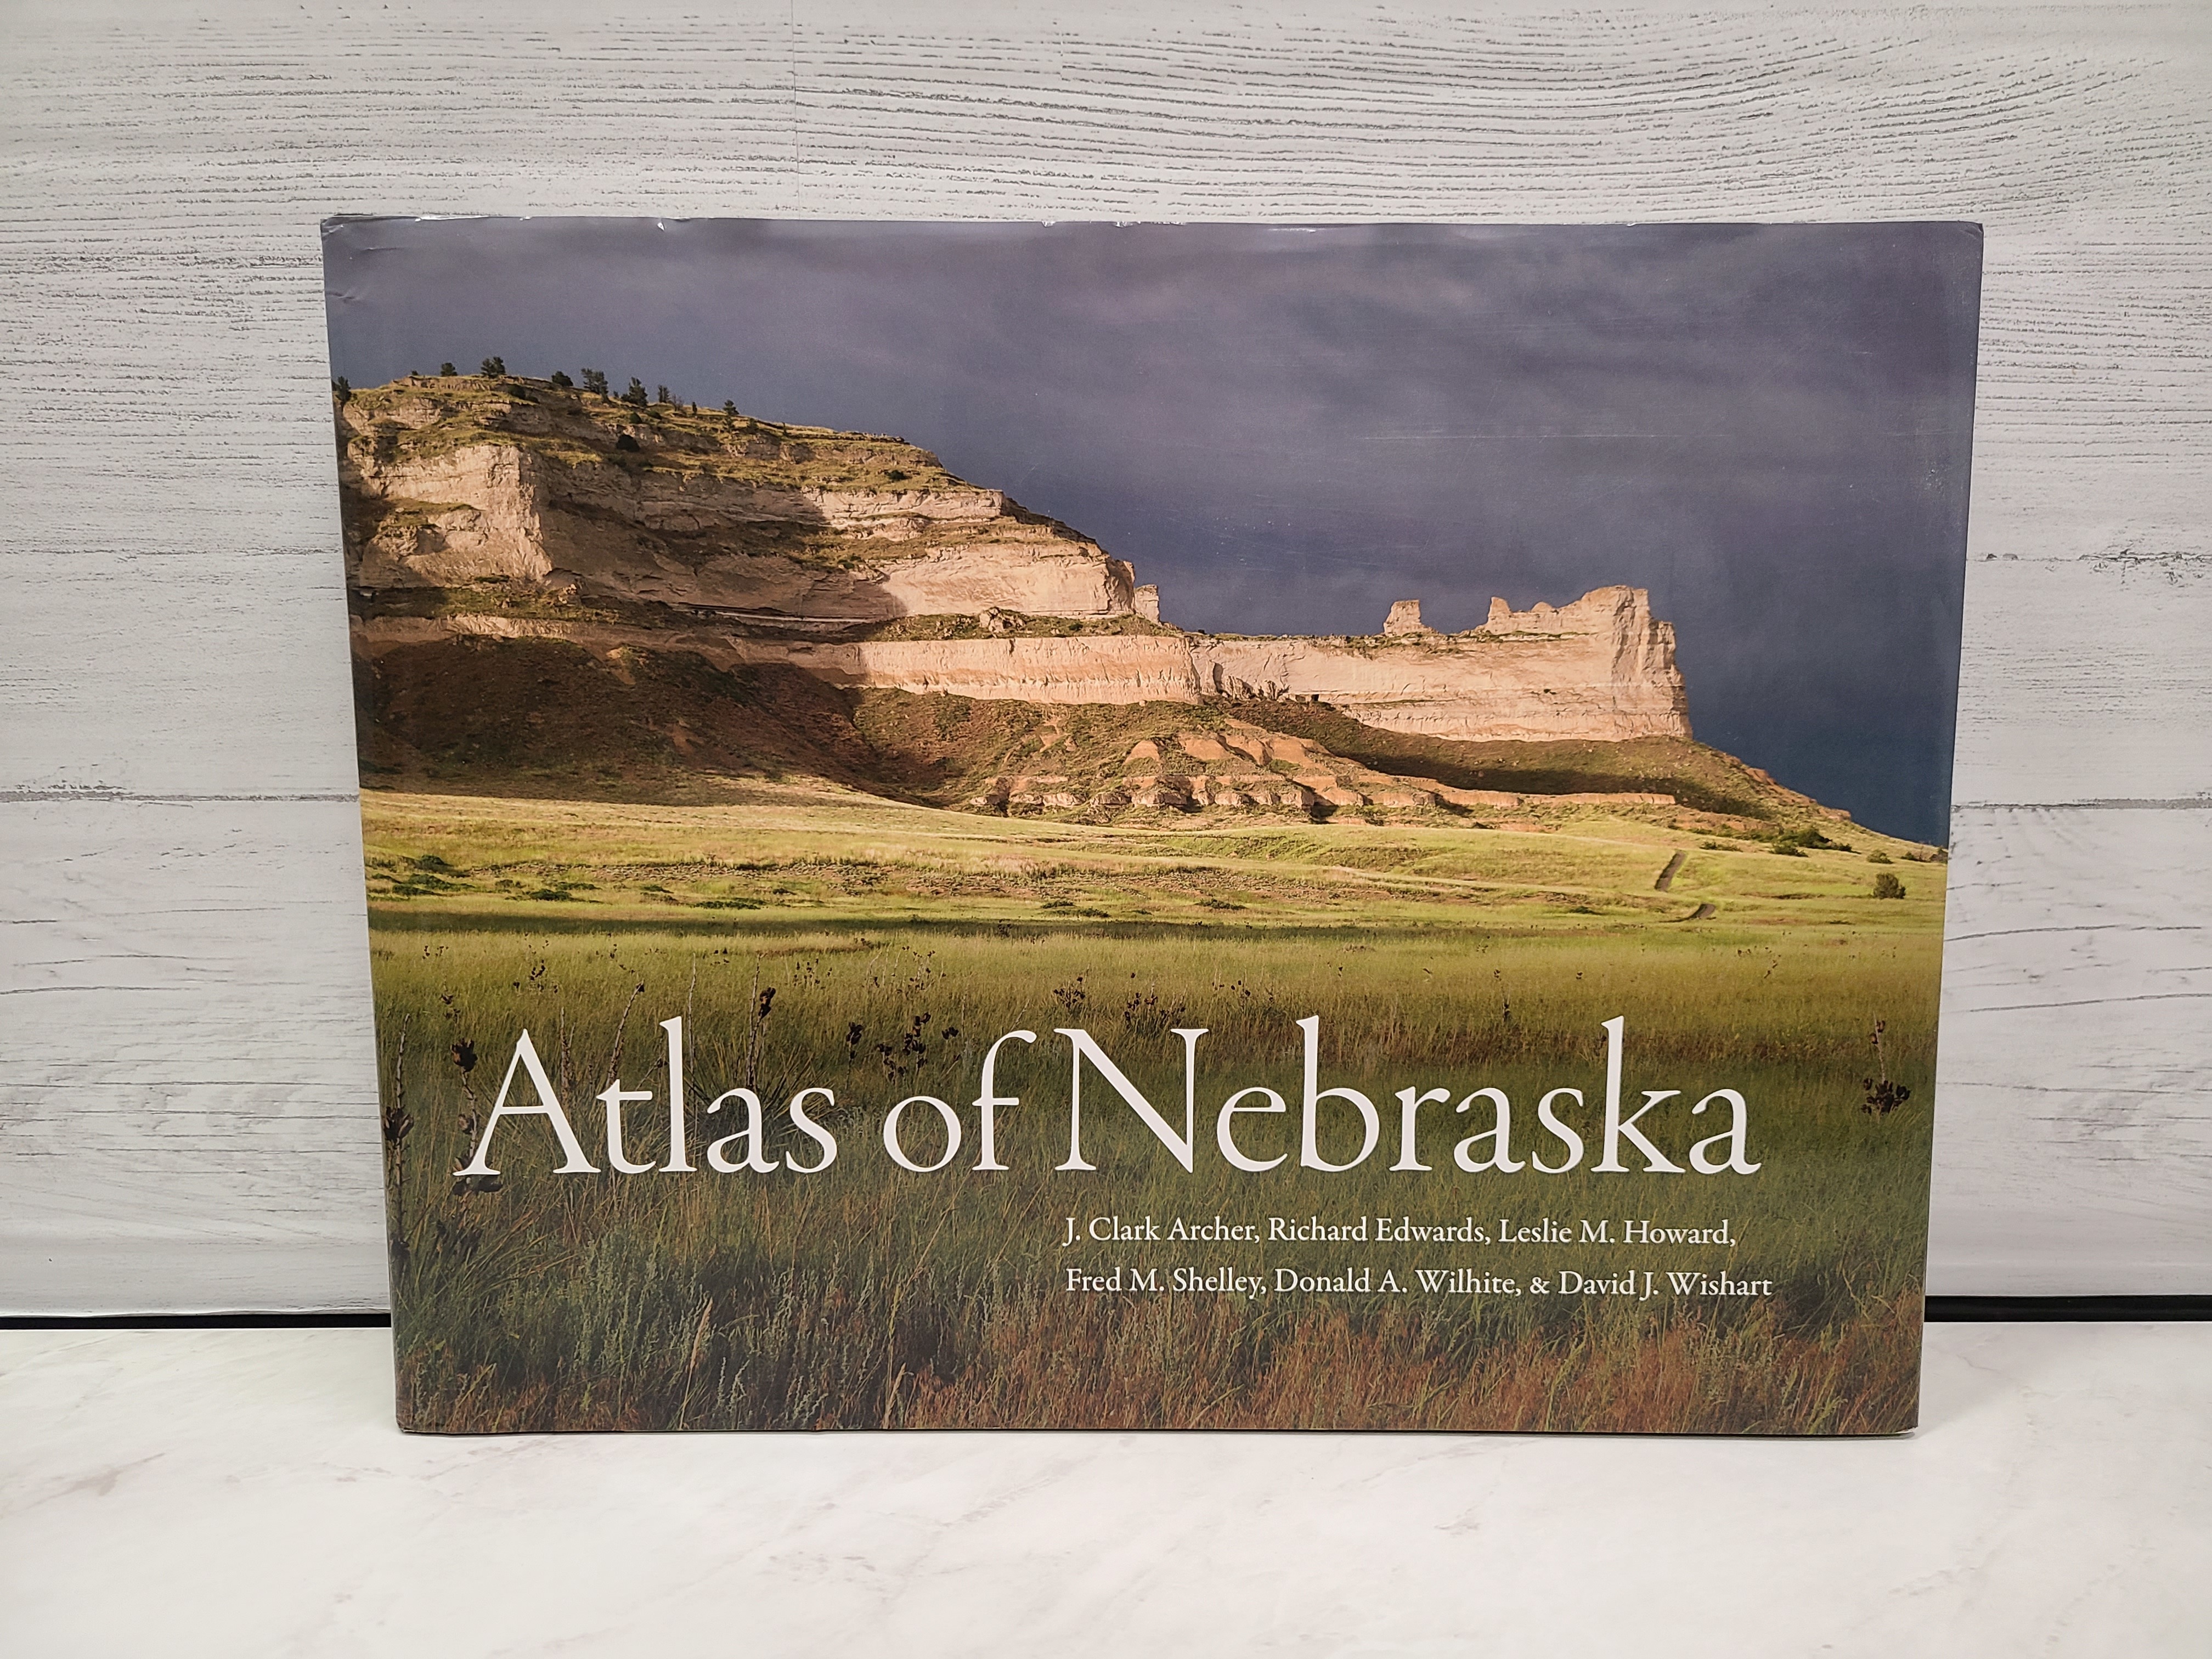 Atlas of Nebraska by J. Clark Archer, Richard Edwards, Leslie M. Howard, Fred M. Shelley, Donald A. Wilhite, and David J. Wishart (Hardcover)